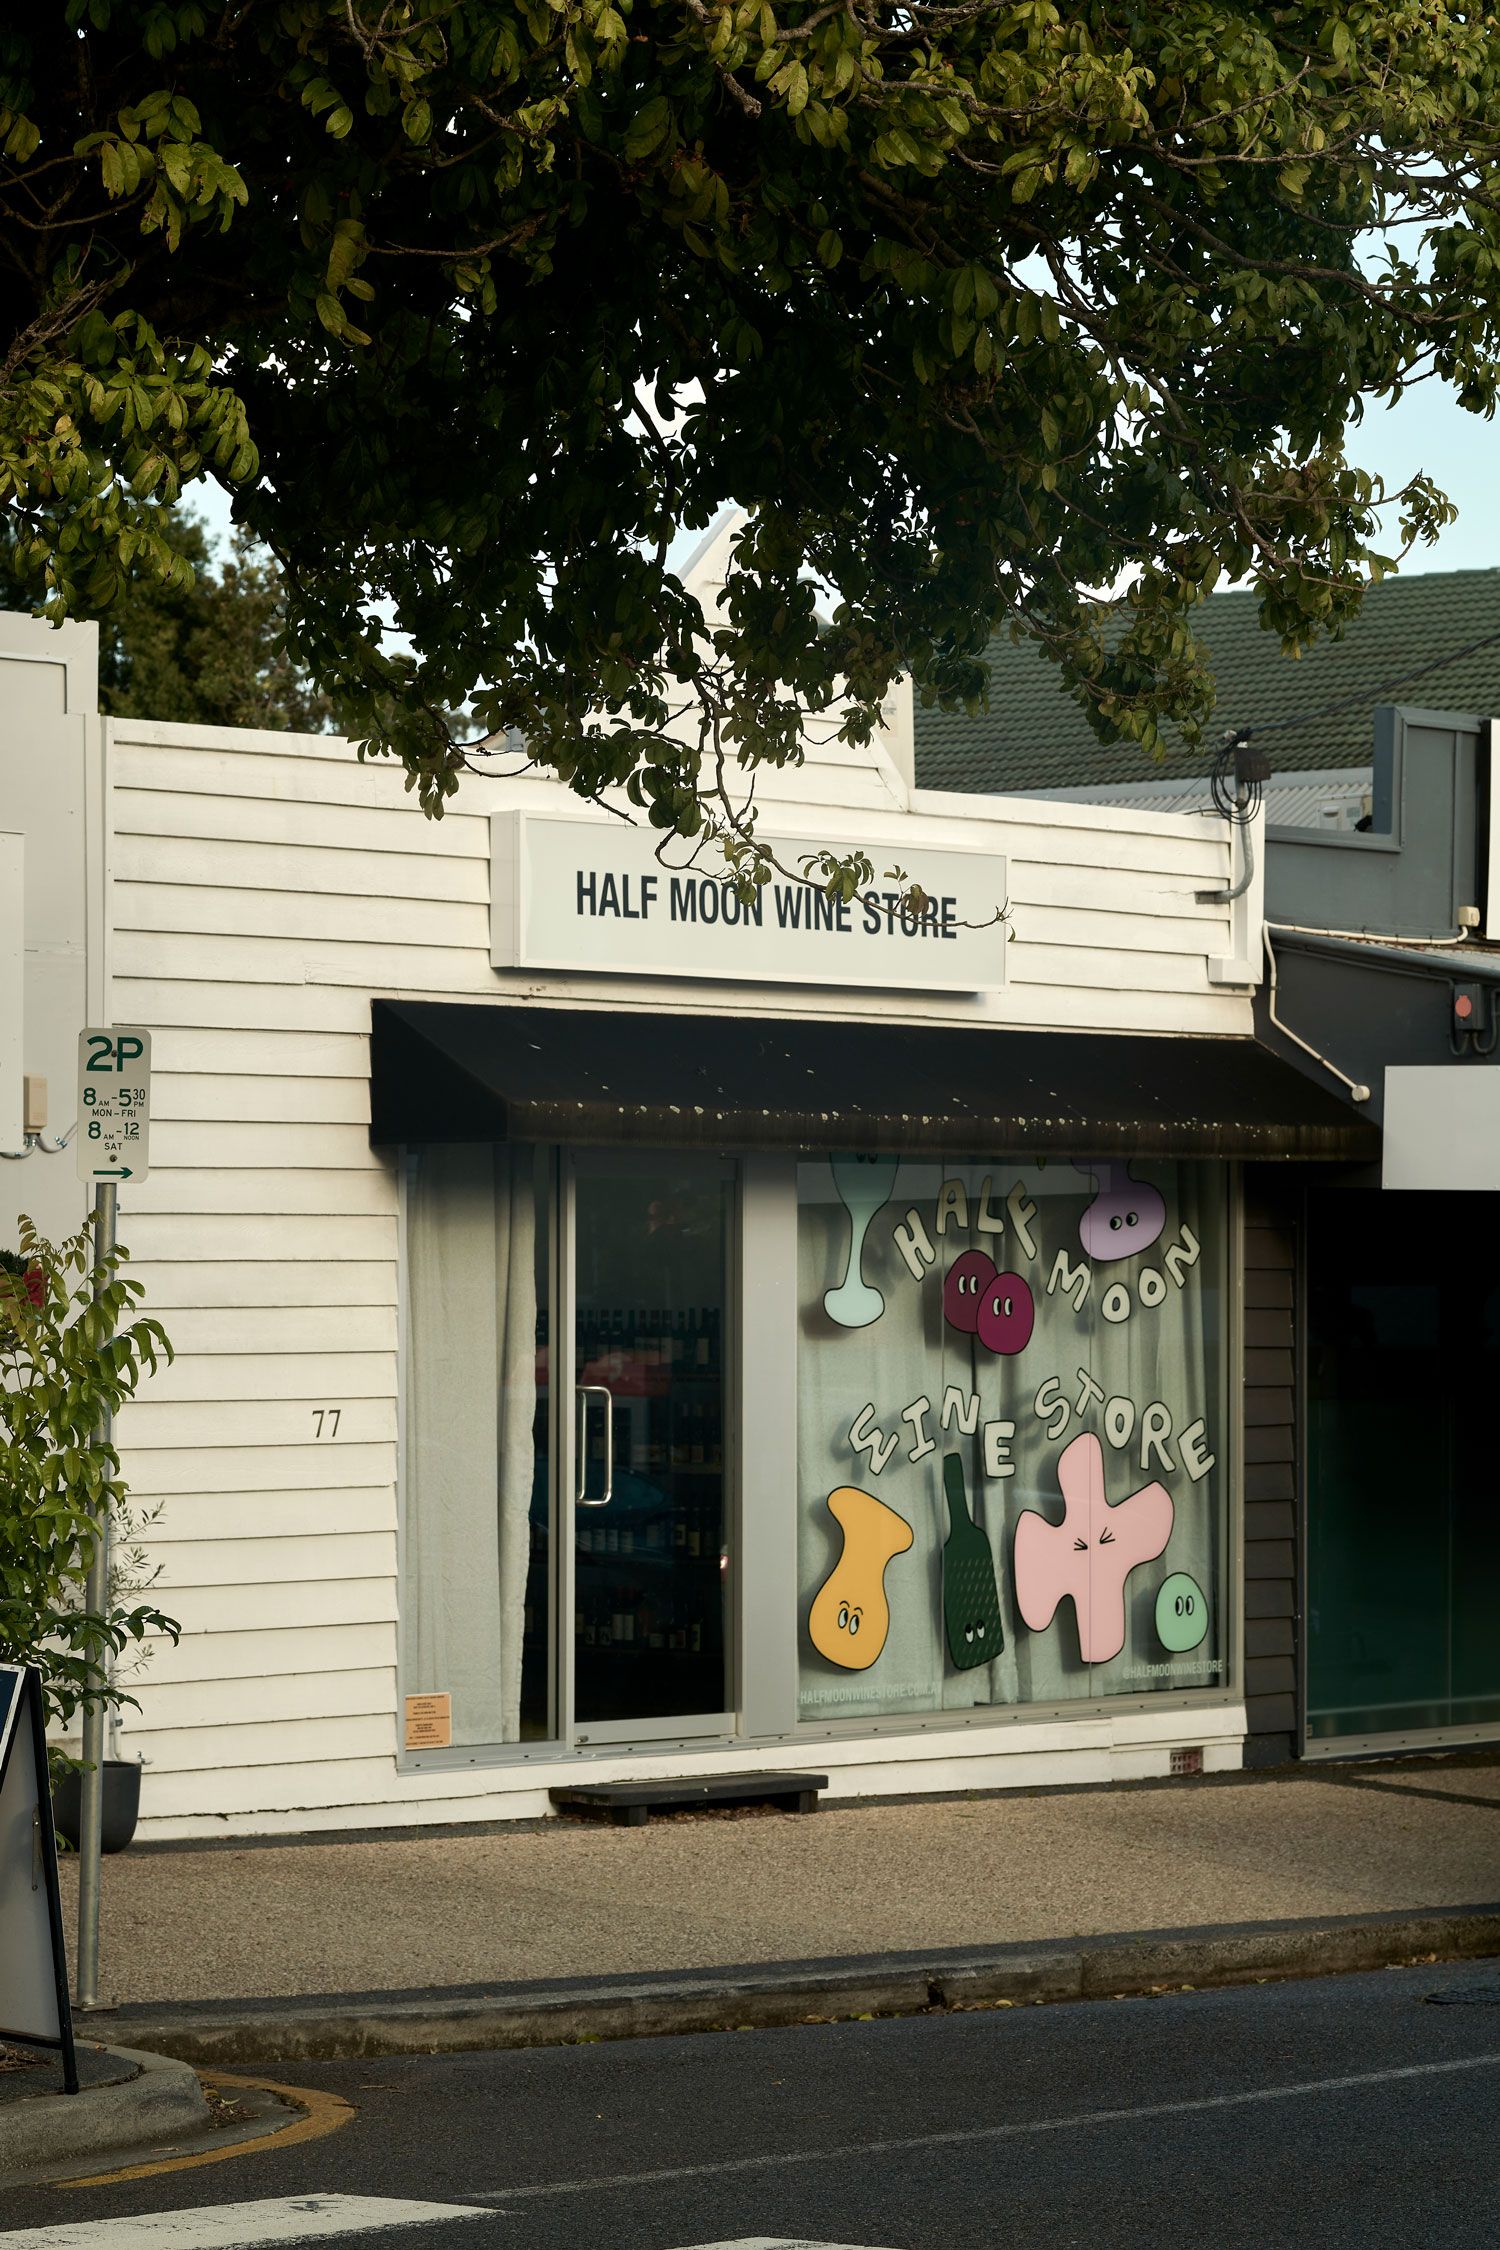 [HM02] Half Moon Wine Store, Window Graphic. Photos: Jack Gibson.